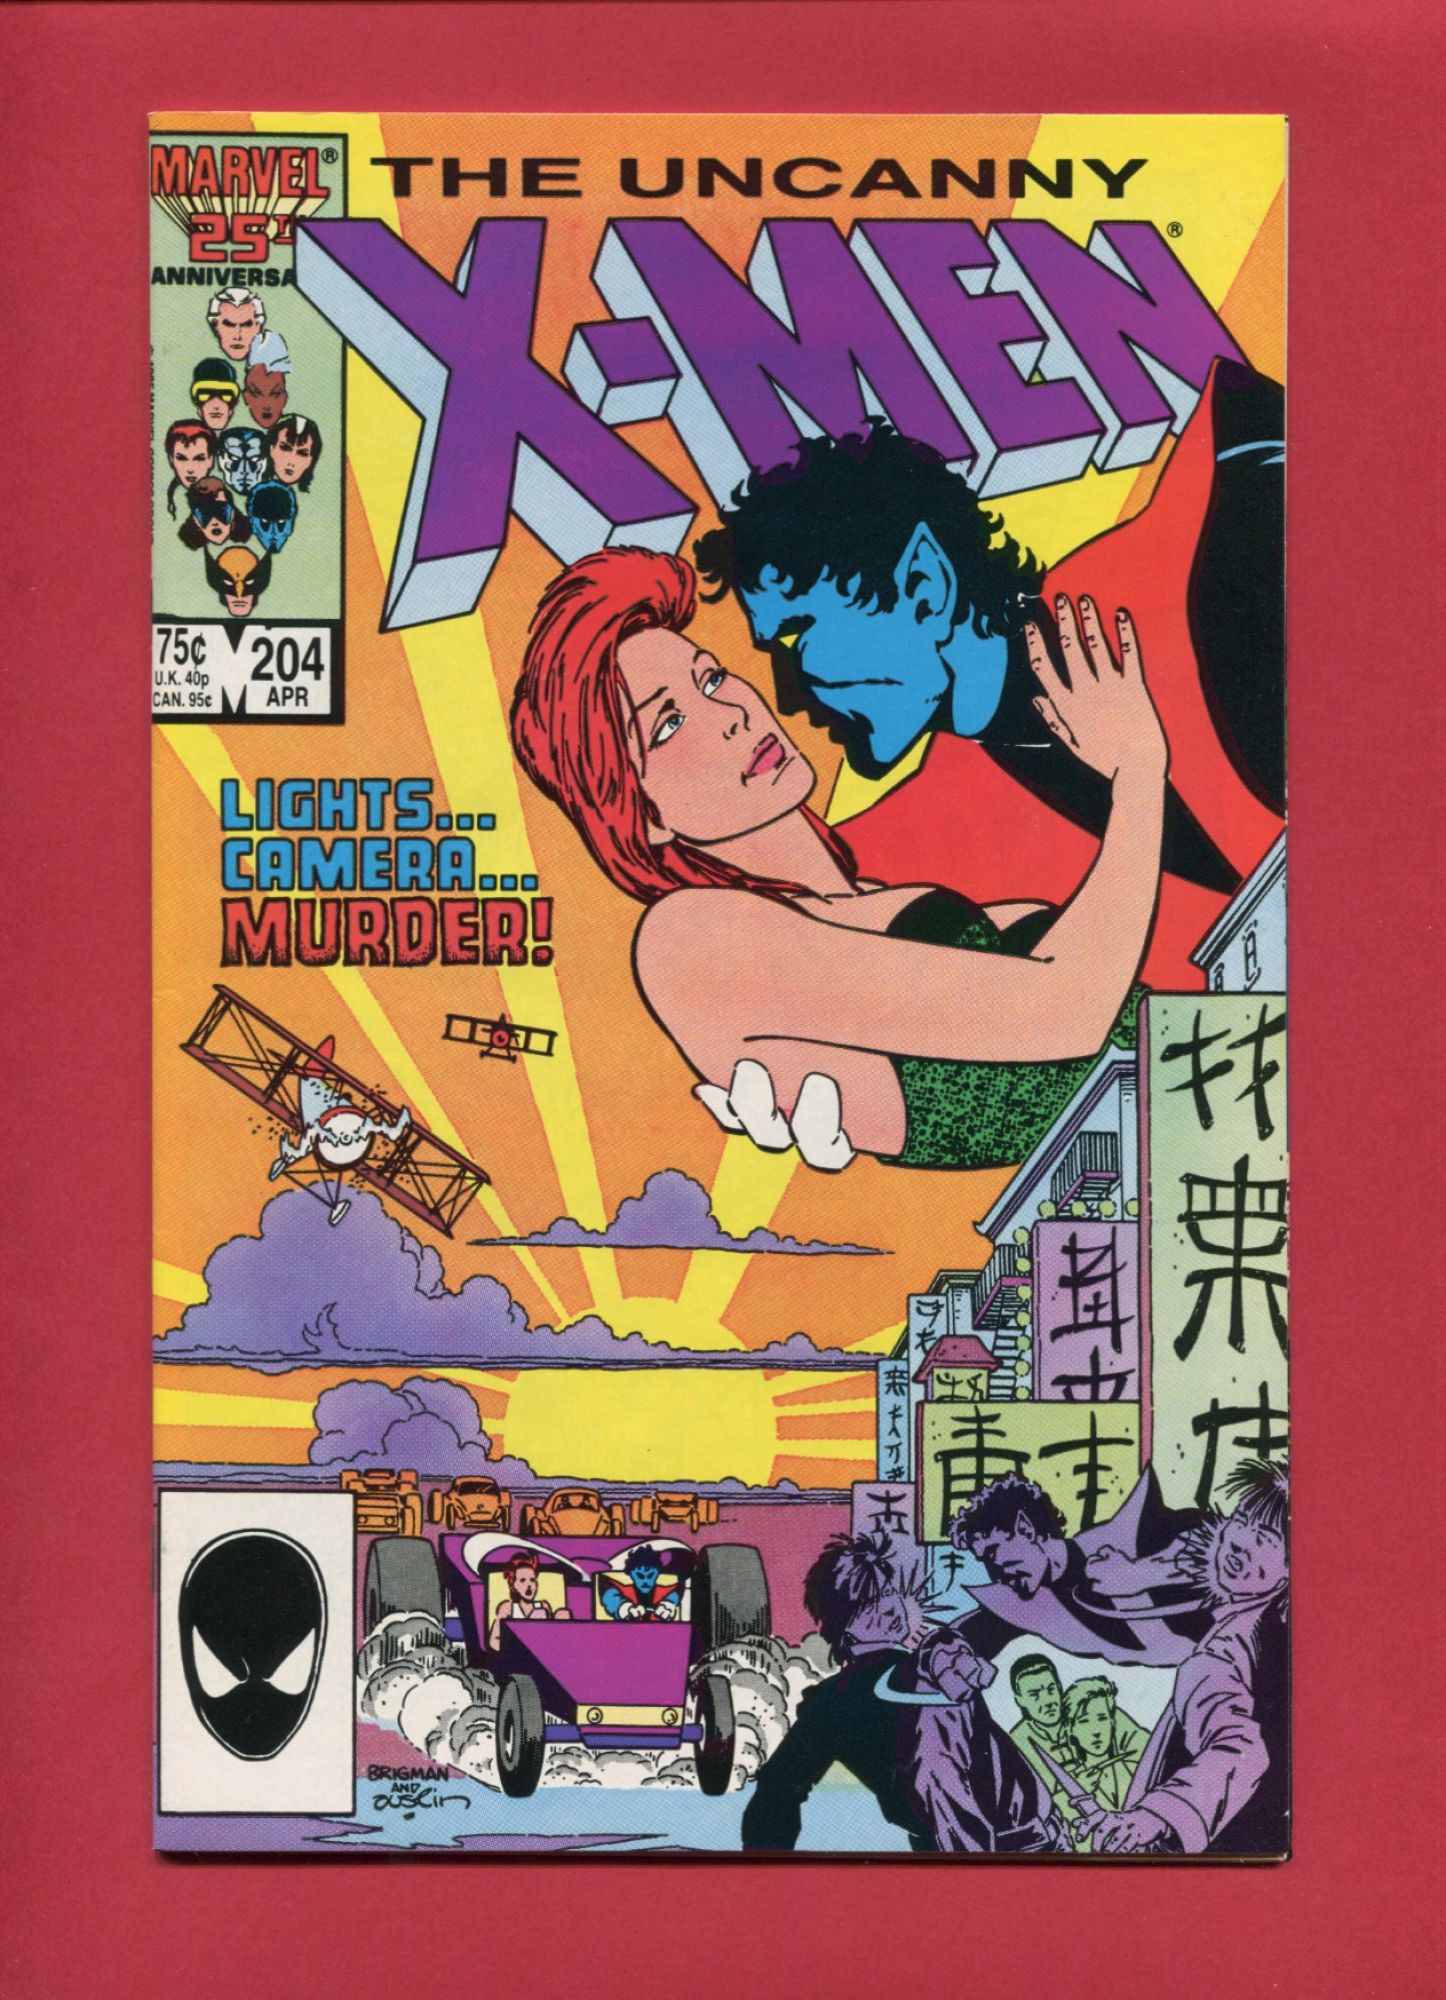 Uncanny X-Men (Volume 1 1963) #204, Apr 1986, Marvel :: Iconic Comics ...